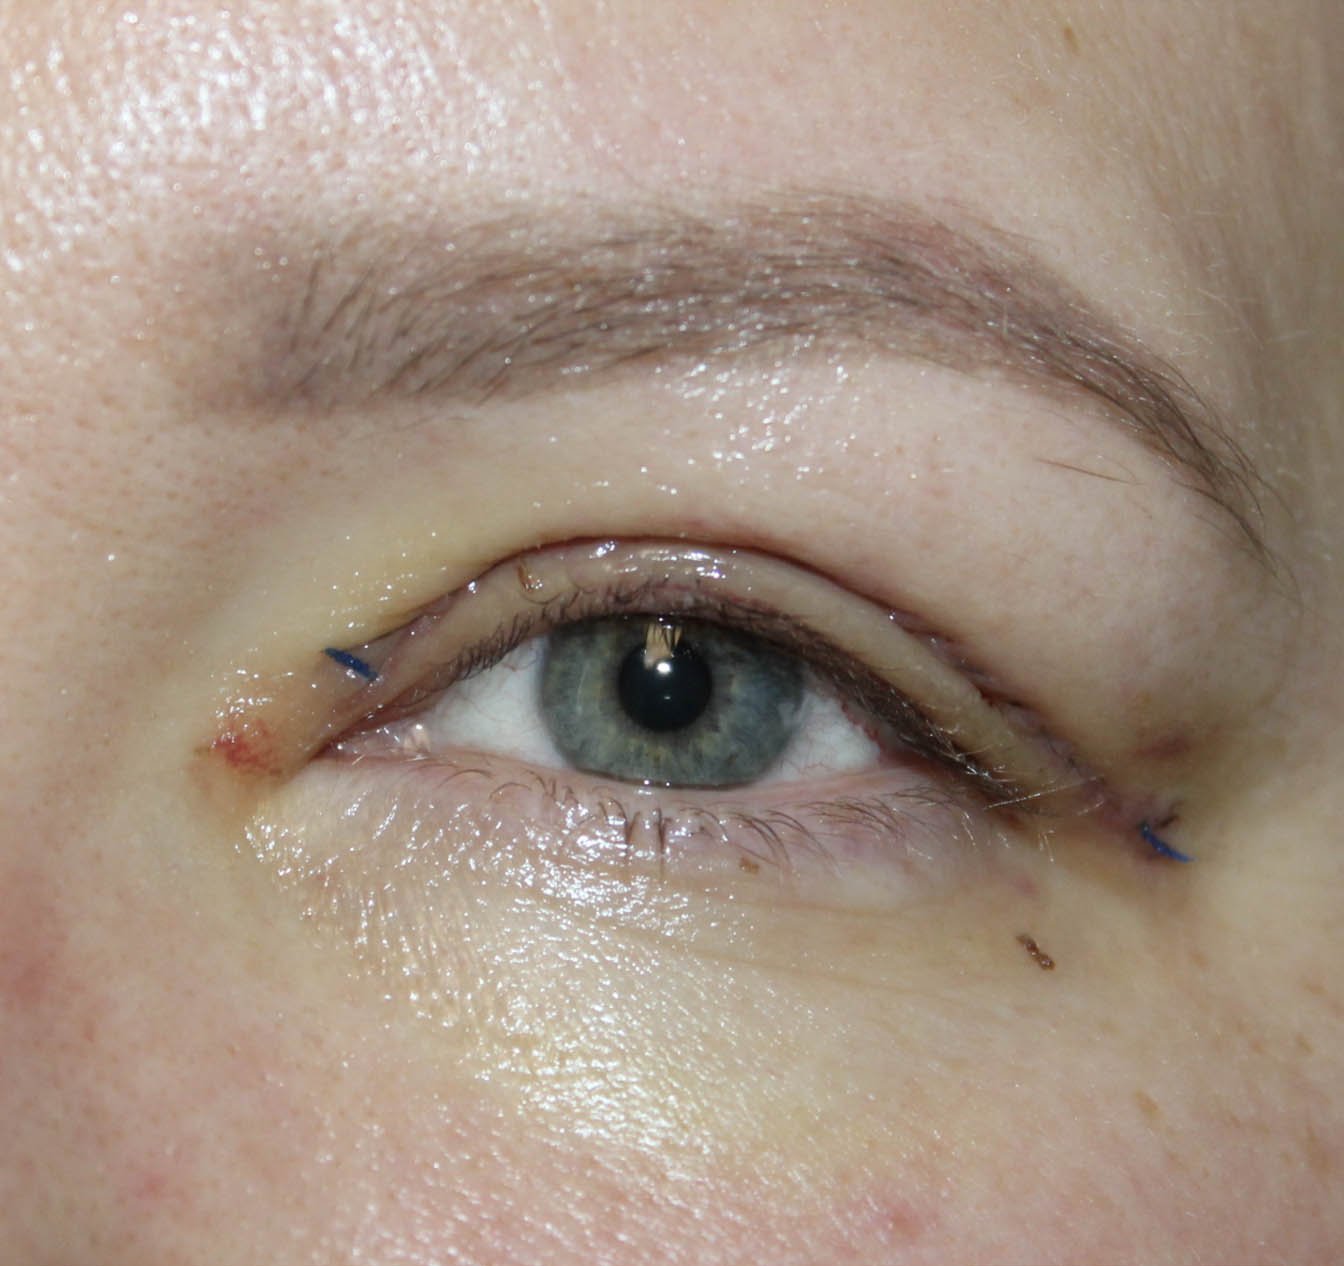 woman open eyes 38 years old 1 week after upper blepharoplasty procedure